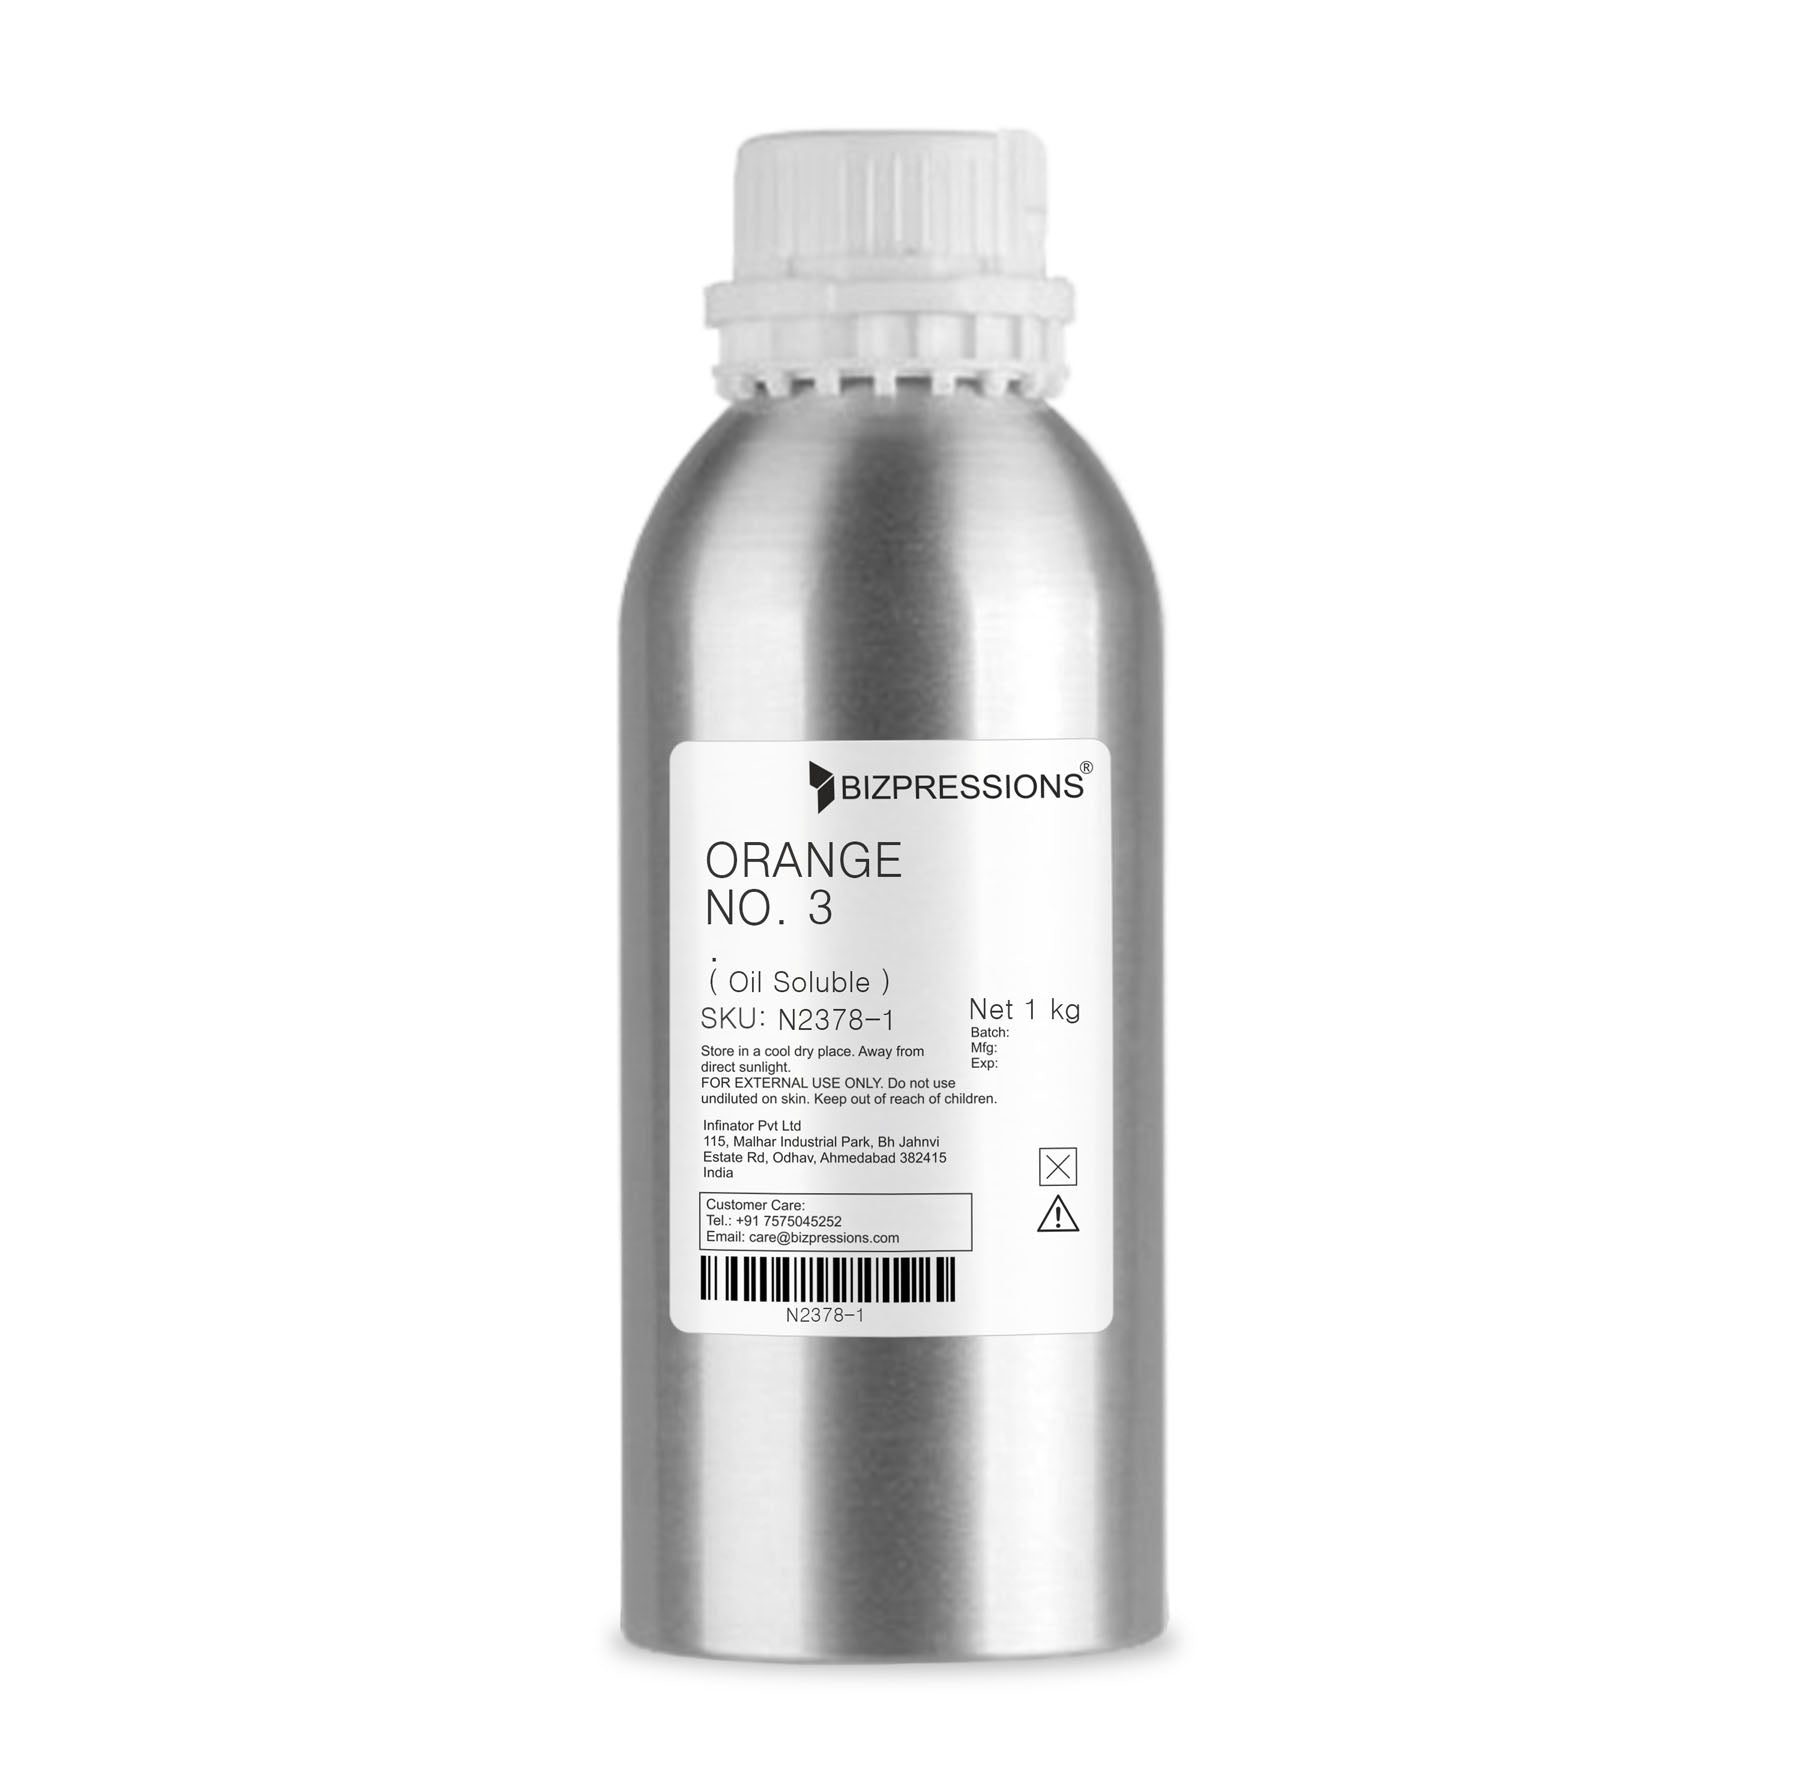 ORANGE NO. 3 - Fragrance ( Oil Soluble ) - 1 kg